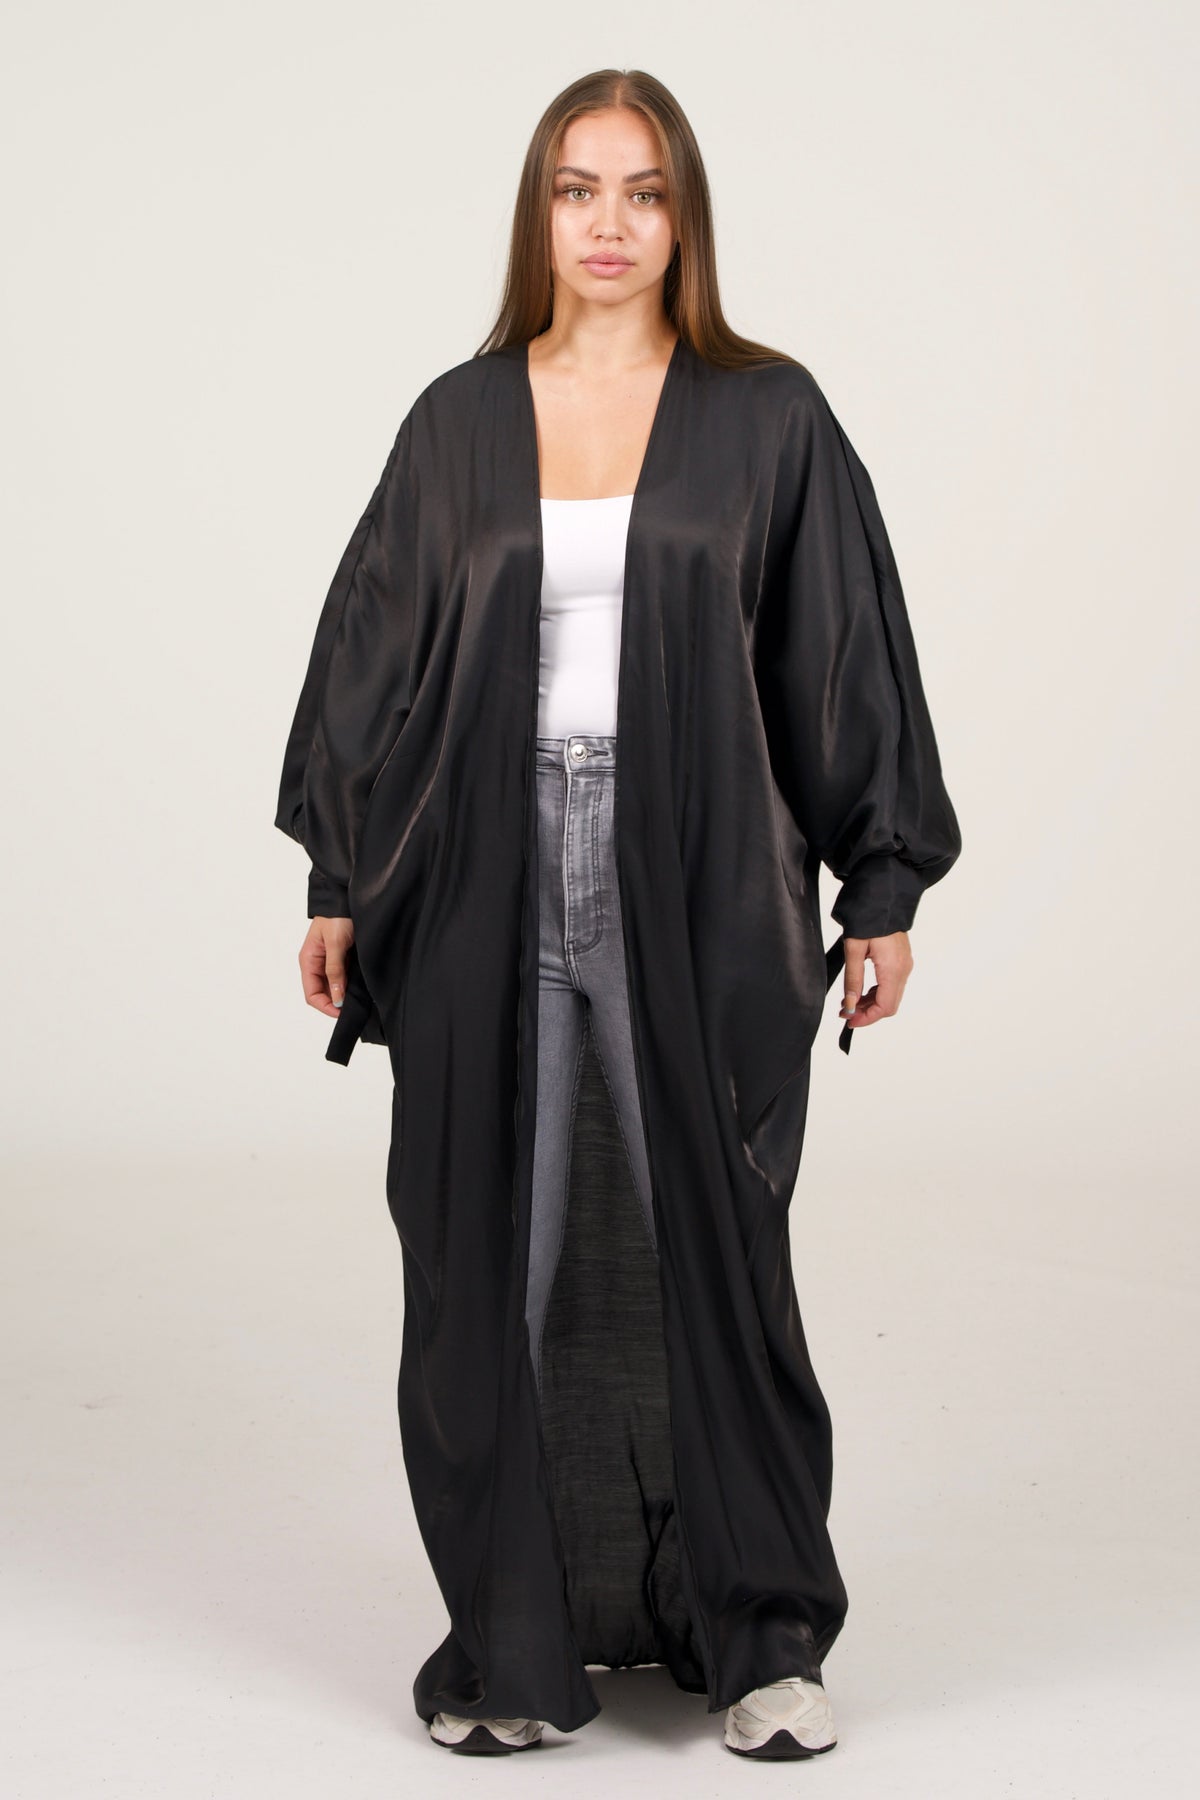 Shiny Black Kimono With Bows On The Sleeves